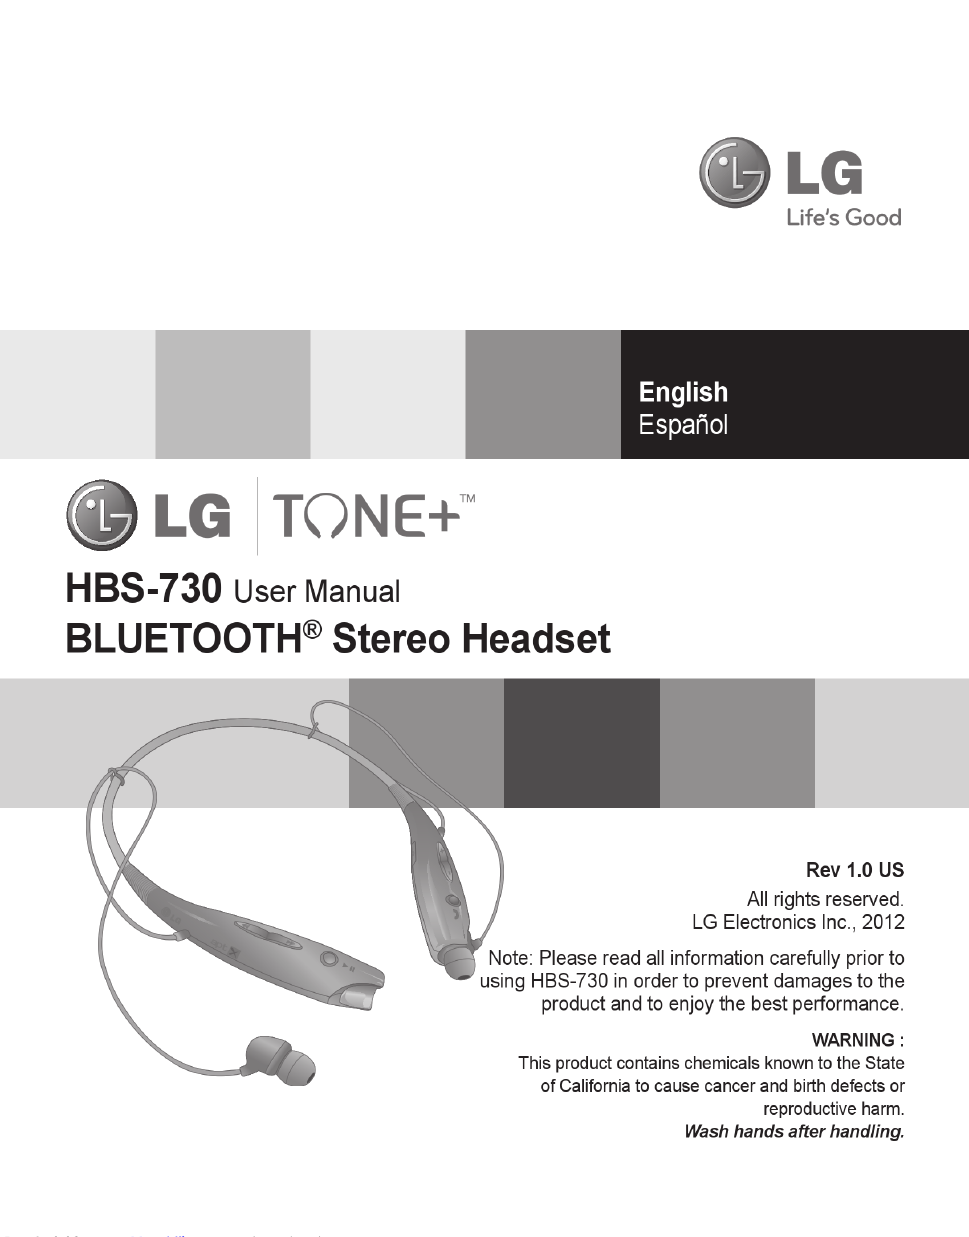 Bose A20 Aviation Headset User Manual